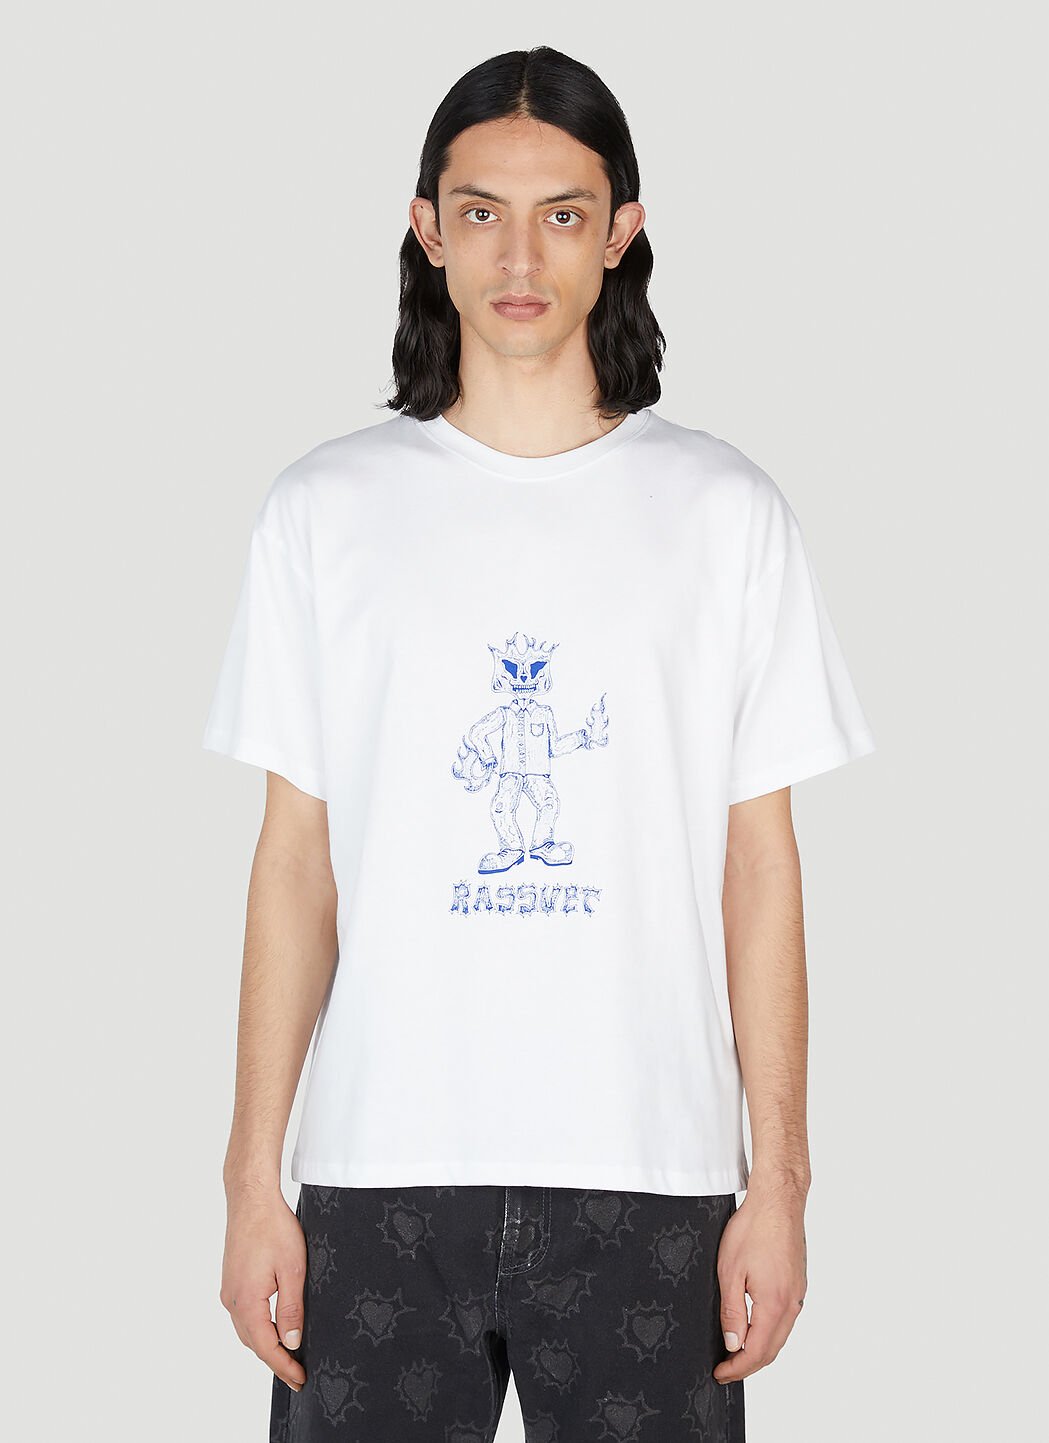 ICE & TECHNO 멘 킵 댄싱 티셔츠 그레이 int0154001